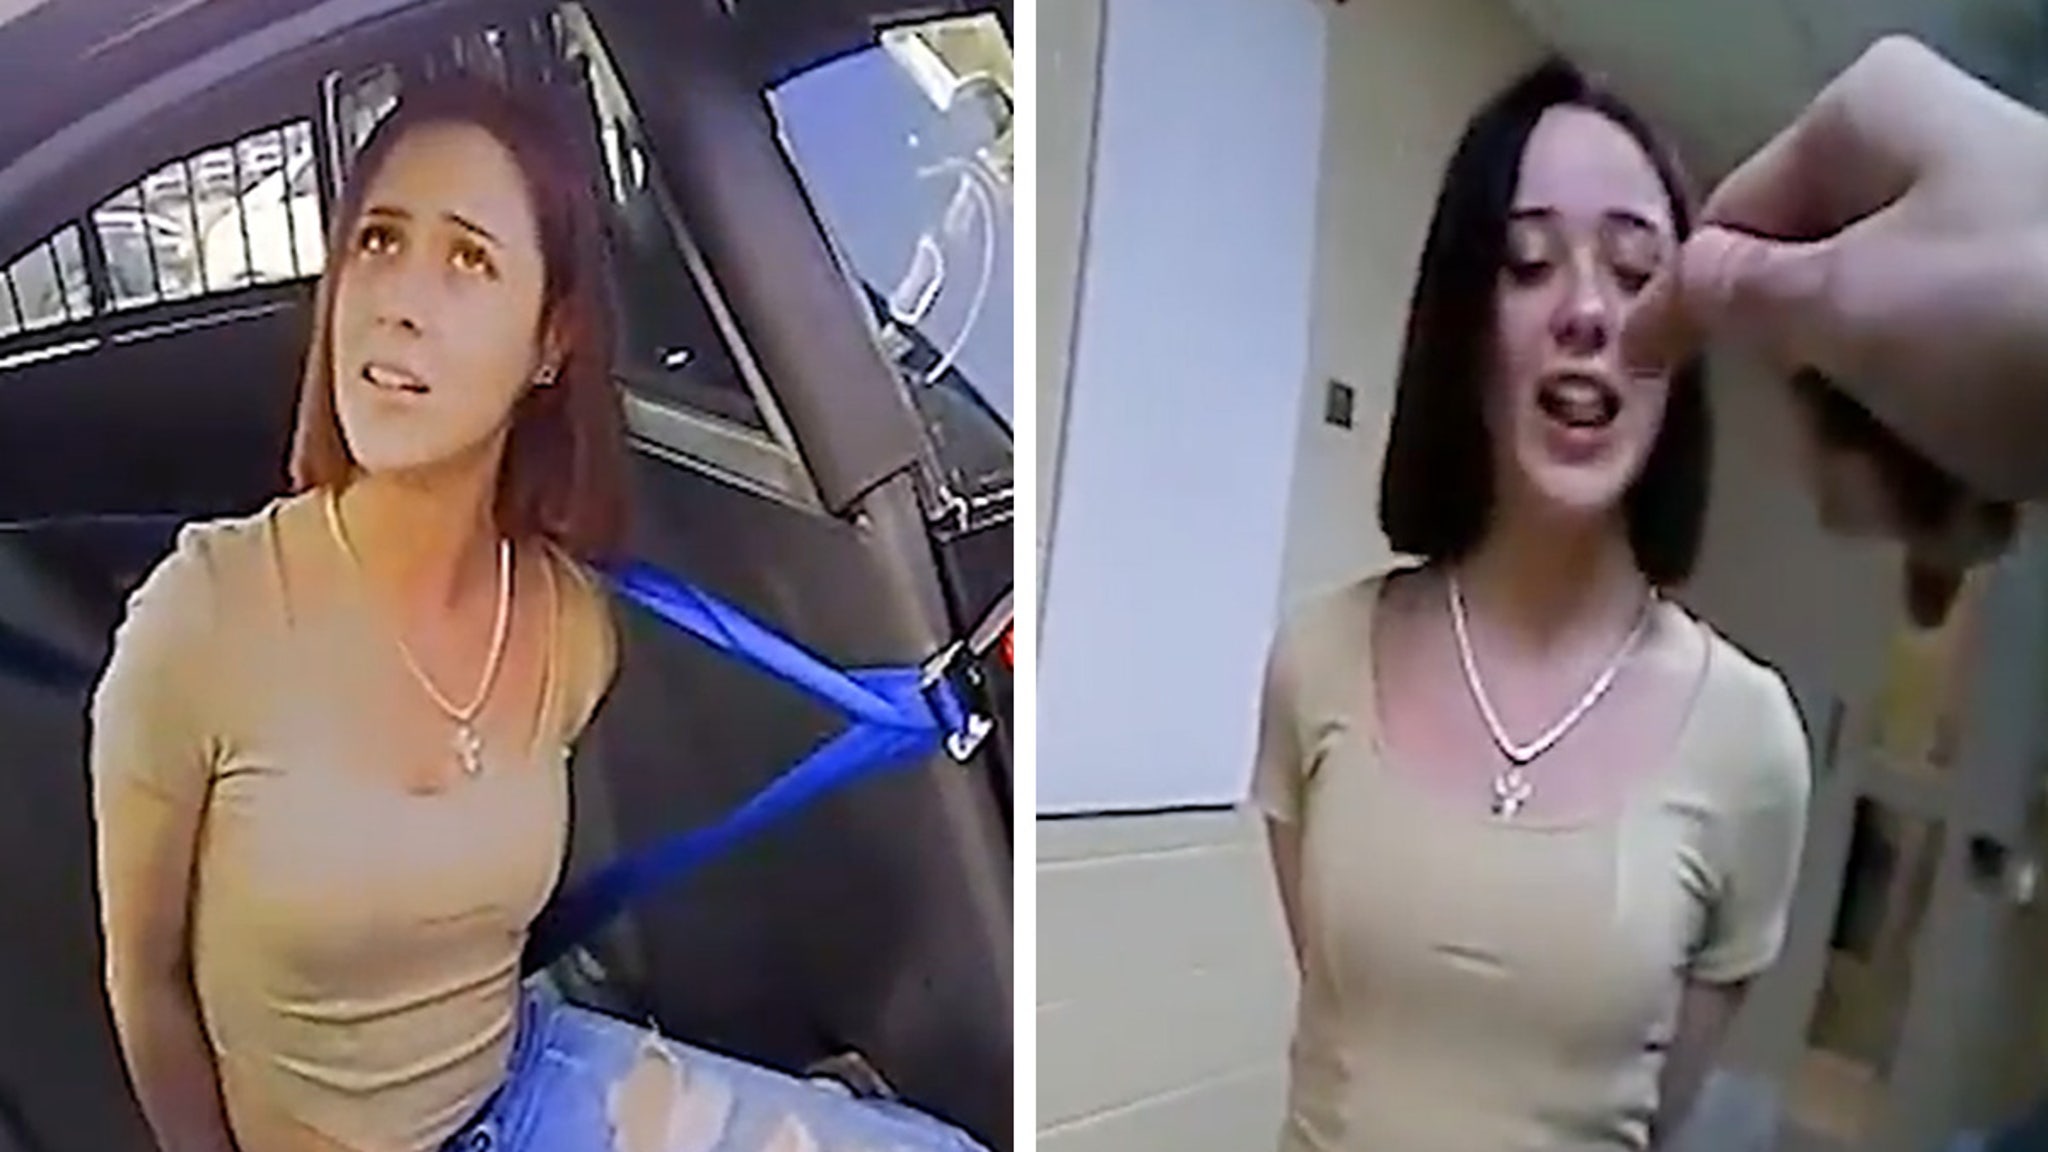 Stripper Tries Seducing Cop During Arrest Captured on Body Camera